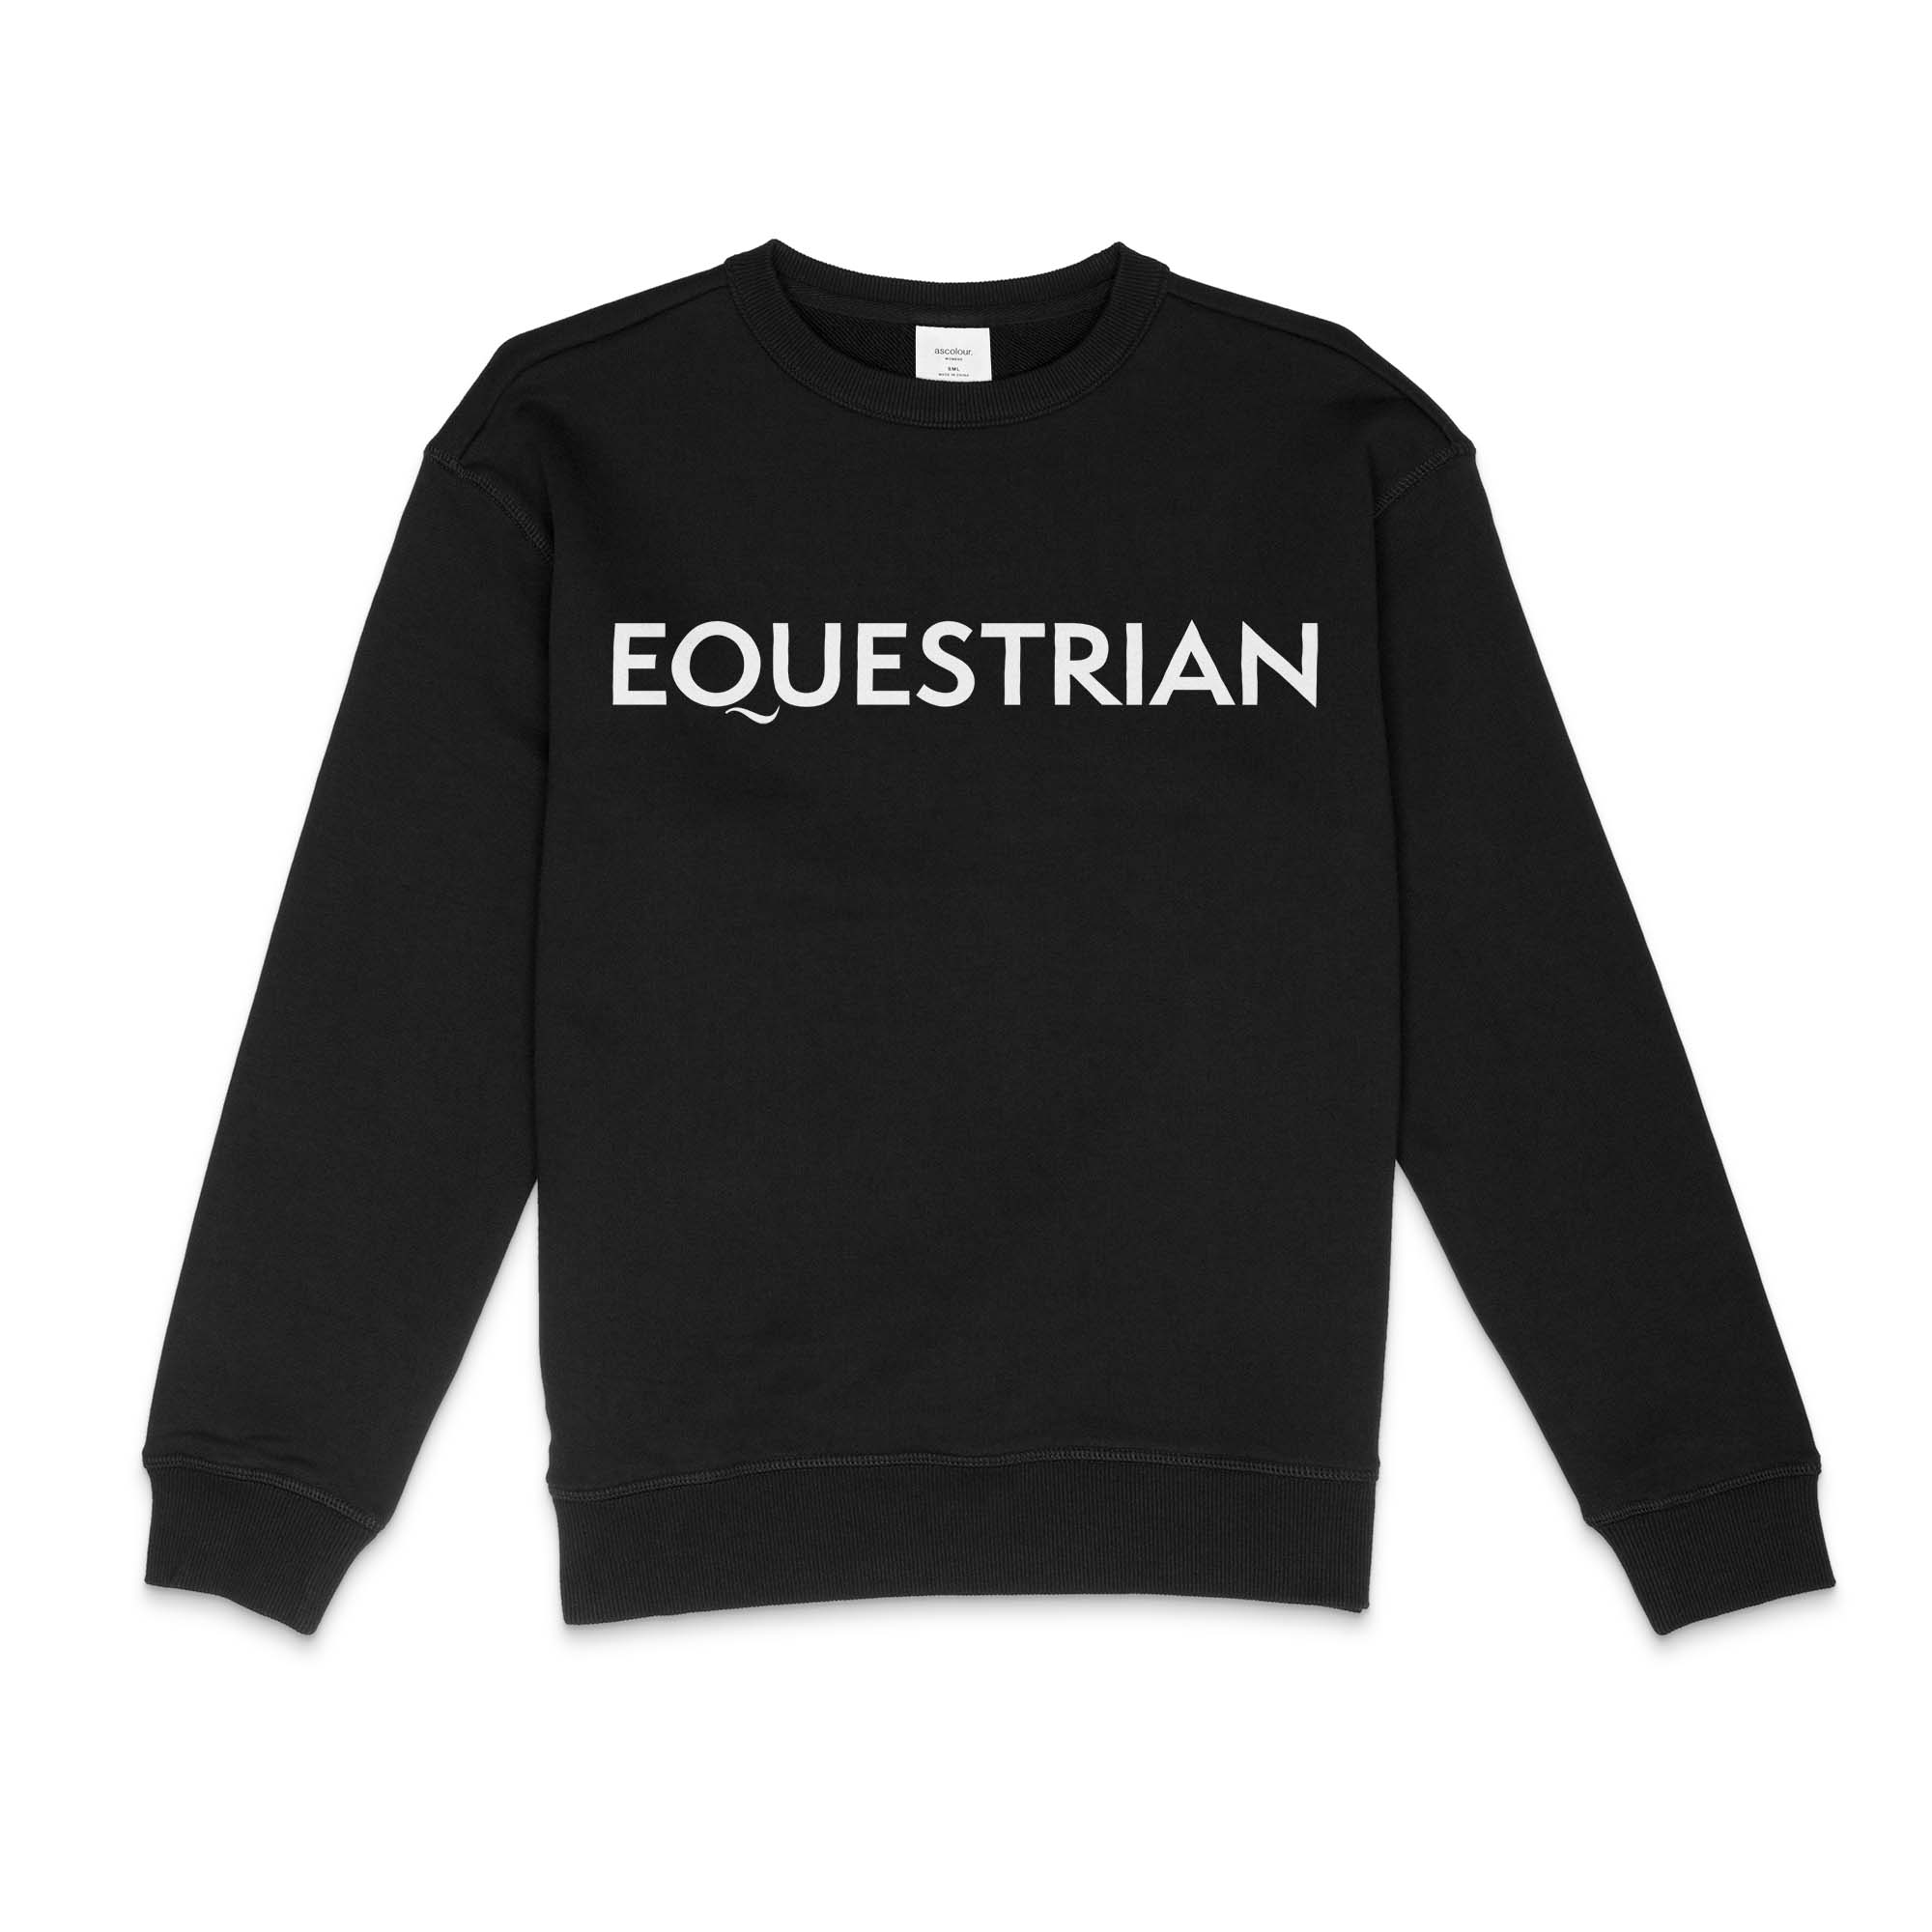 Equestrian Sweater for Equestrians-Black